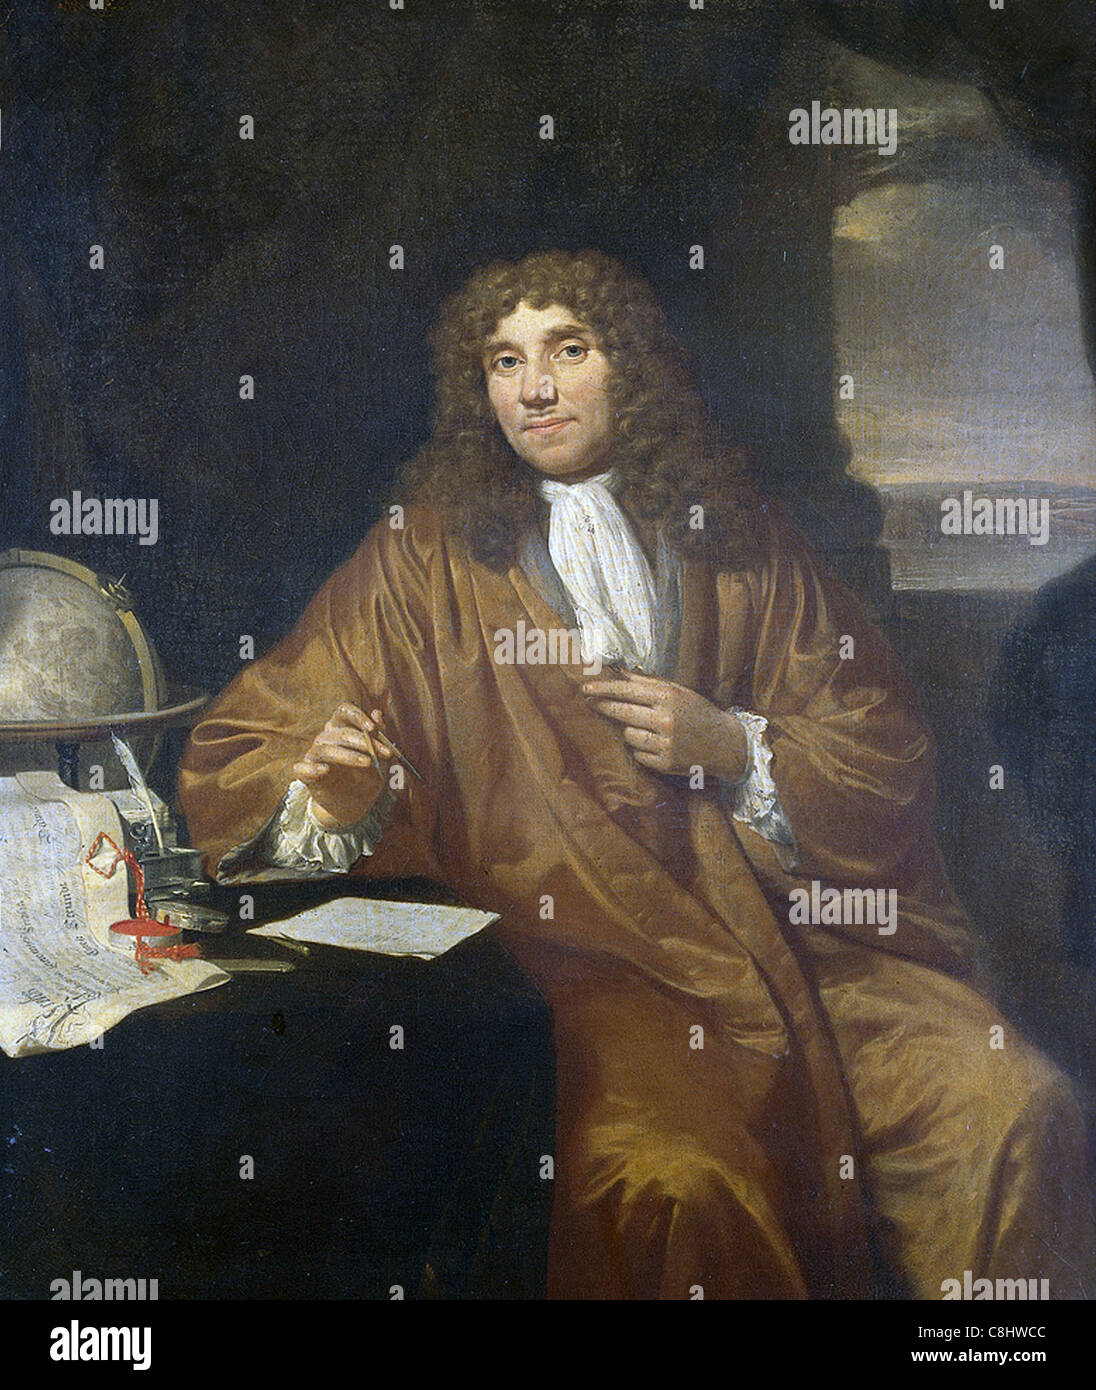 ANTOINE van LEEUWENHOEK (1632-1723) Dutch scientist and microbiologist painted by Jan Verkolje about 1680 Stock Photo